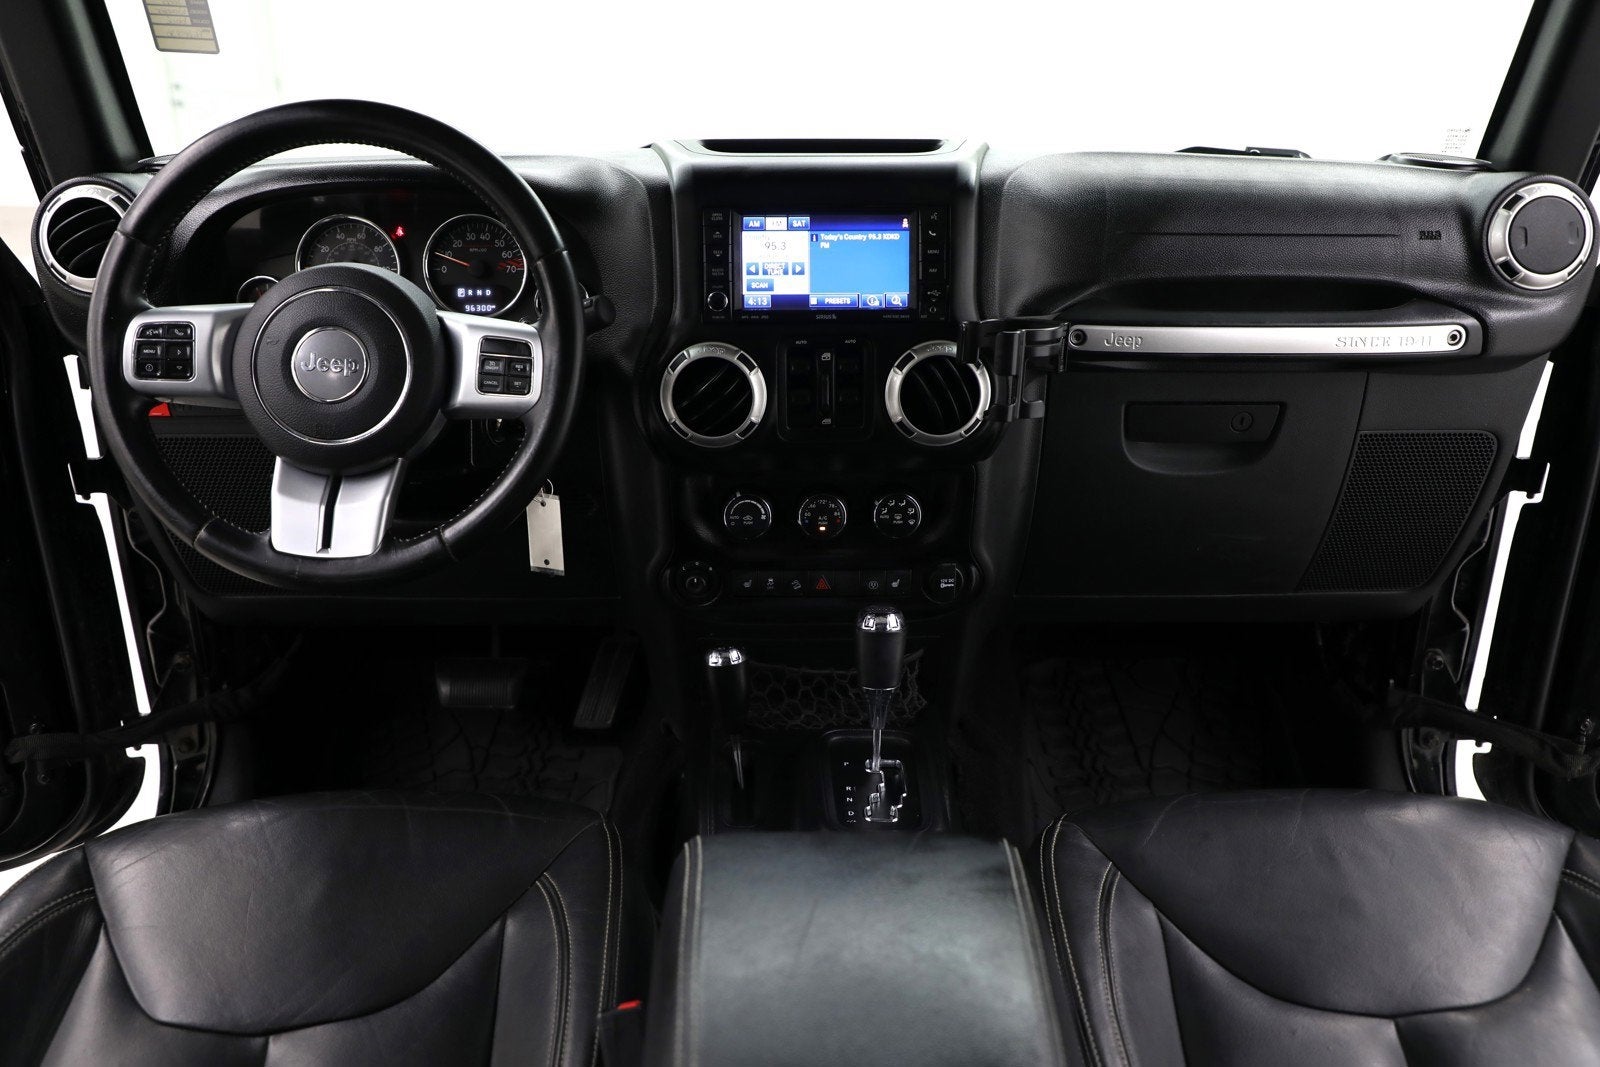 2015 Jeep Wrangler Unlimited Rubicon Hard Rock 4WD Heated Black Leather Seats AEV Wheels Freedom Hard Top Alpine Remote Start